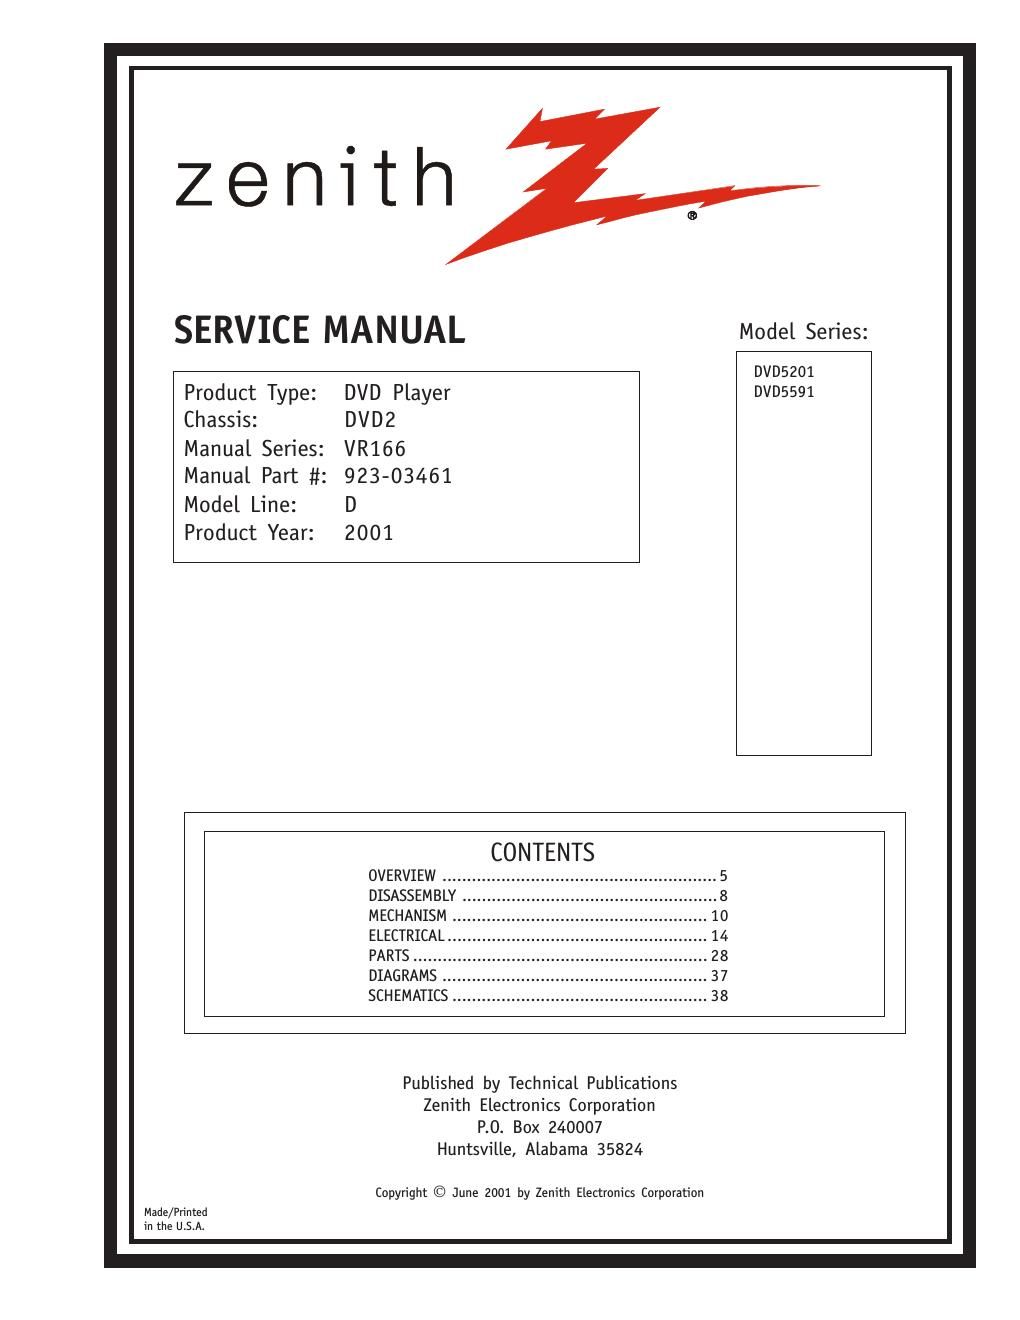 zenith dvd 5201 service manual